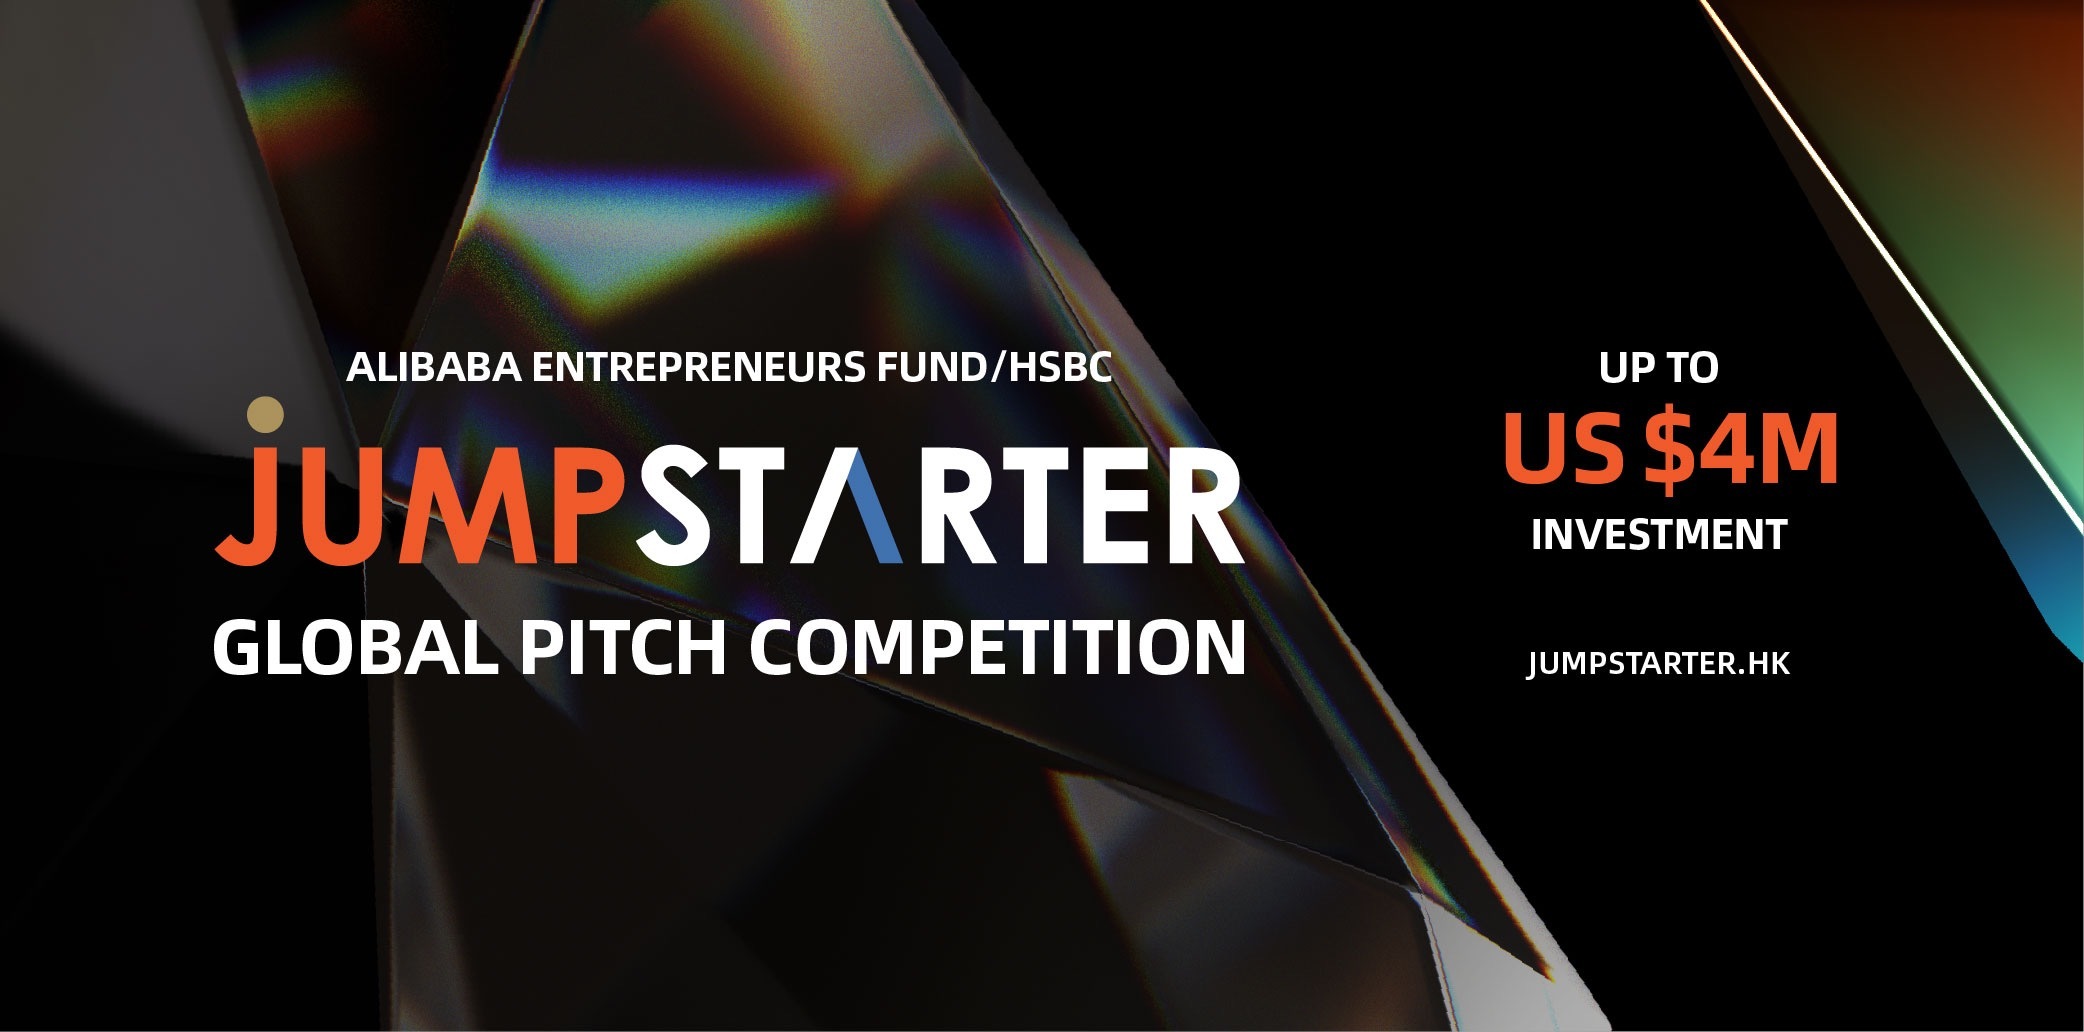 Alibaba Entrepreneurs Fund / HSBC JUMPSTARTER 2022 finalists make pitches to showcase impactful solutions